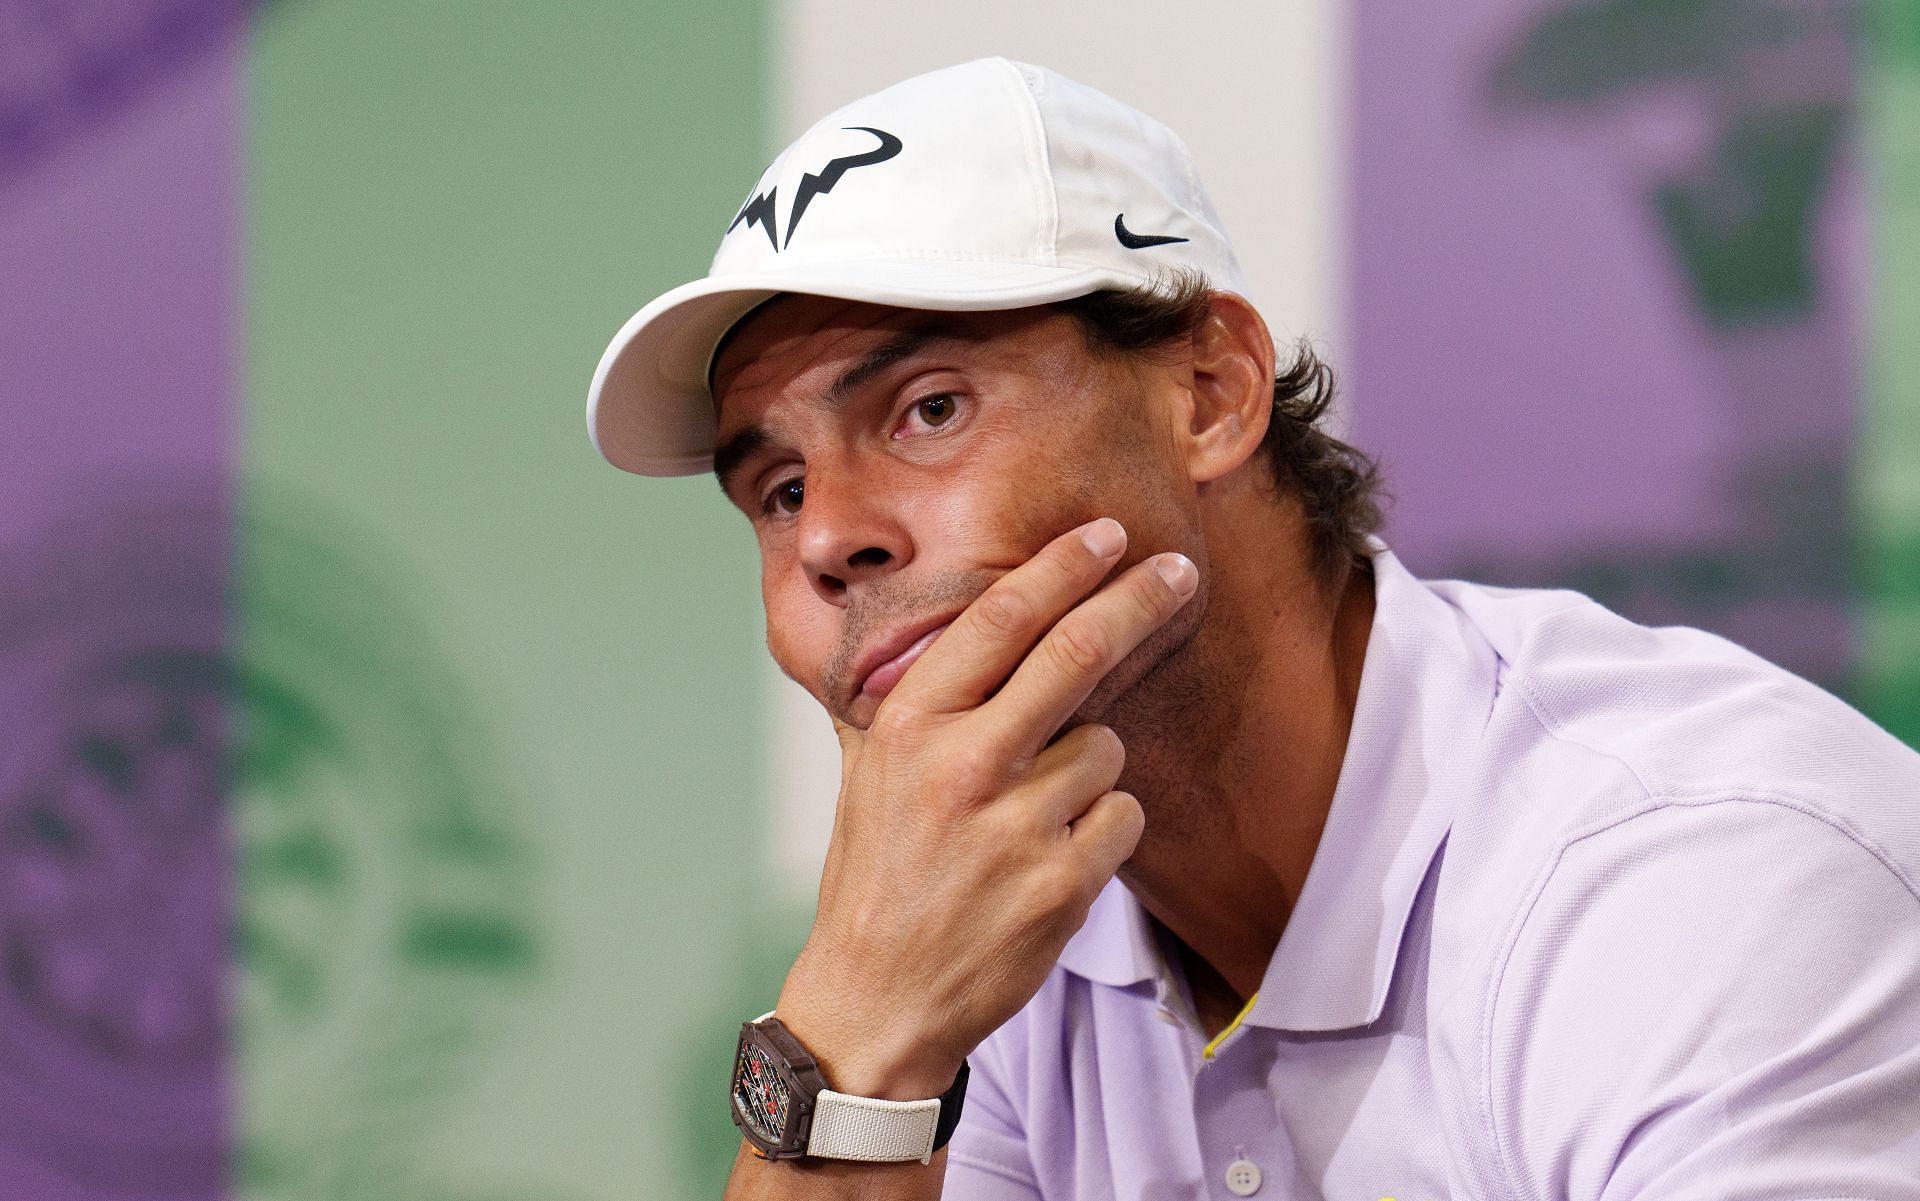 Rafael Nadal reached the semifinals at Wimbledon